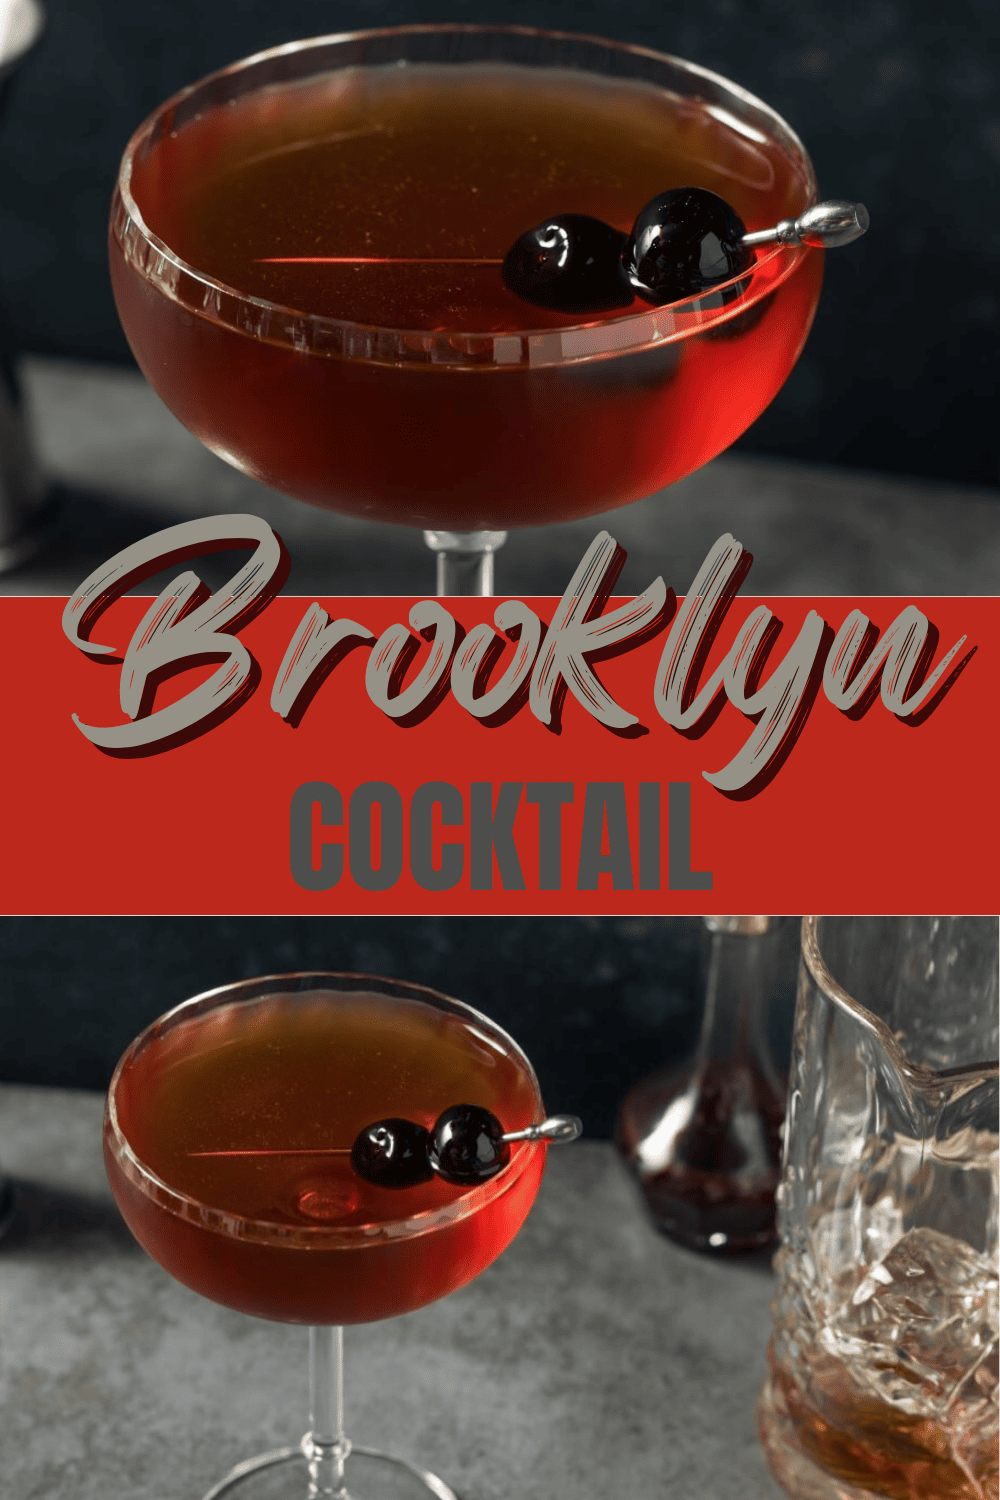 Brooklyn Cocktail Recipe